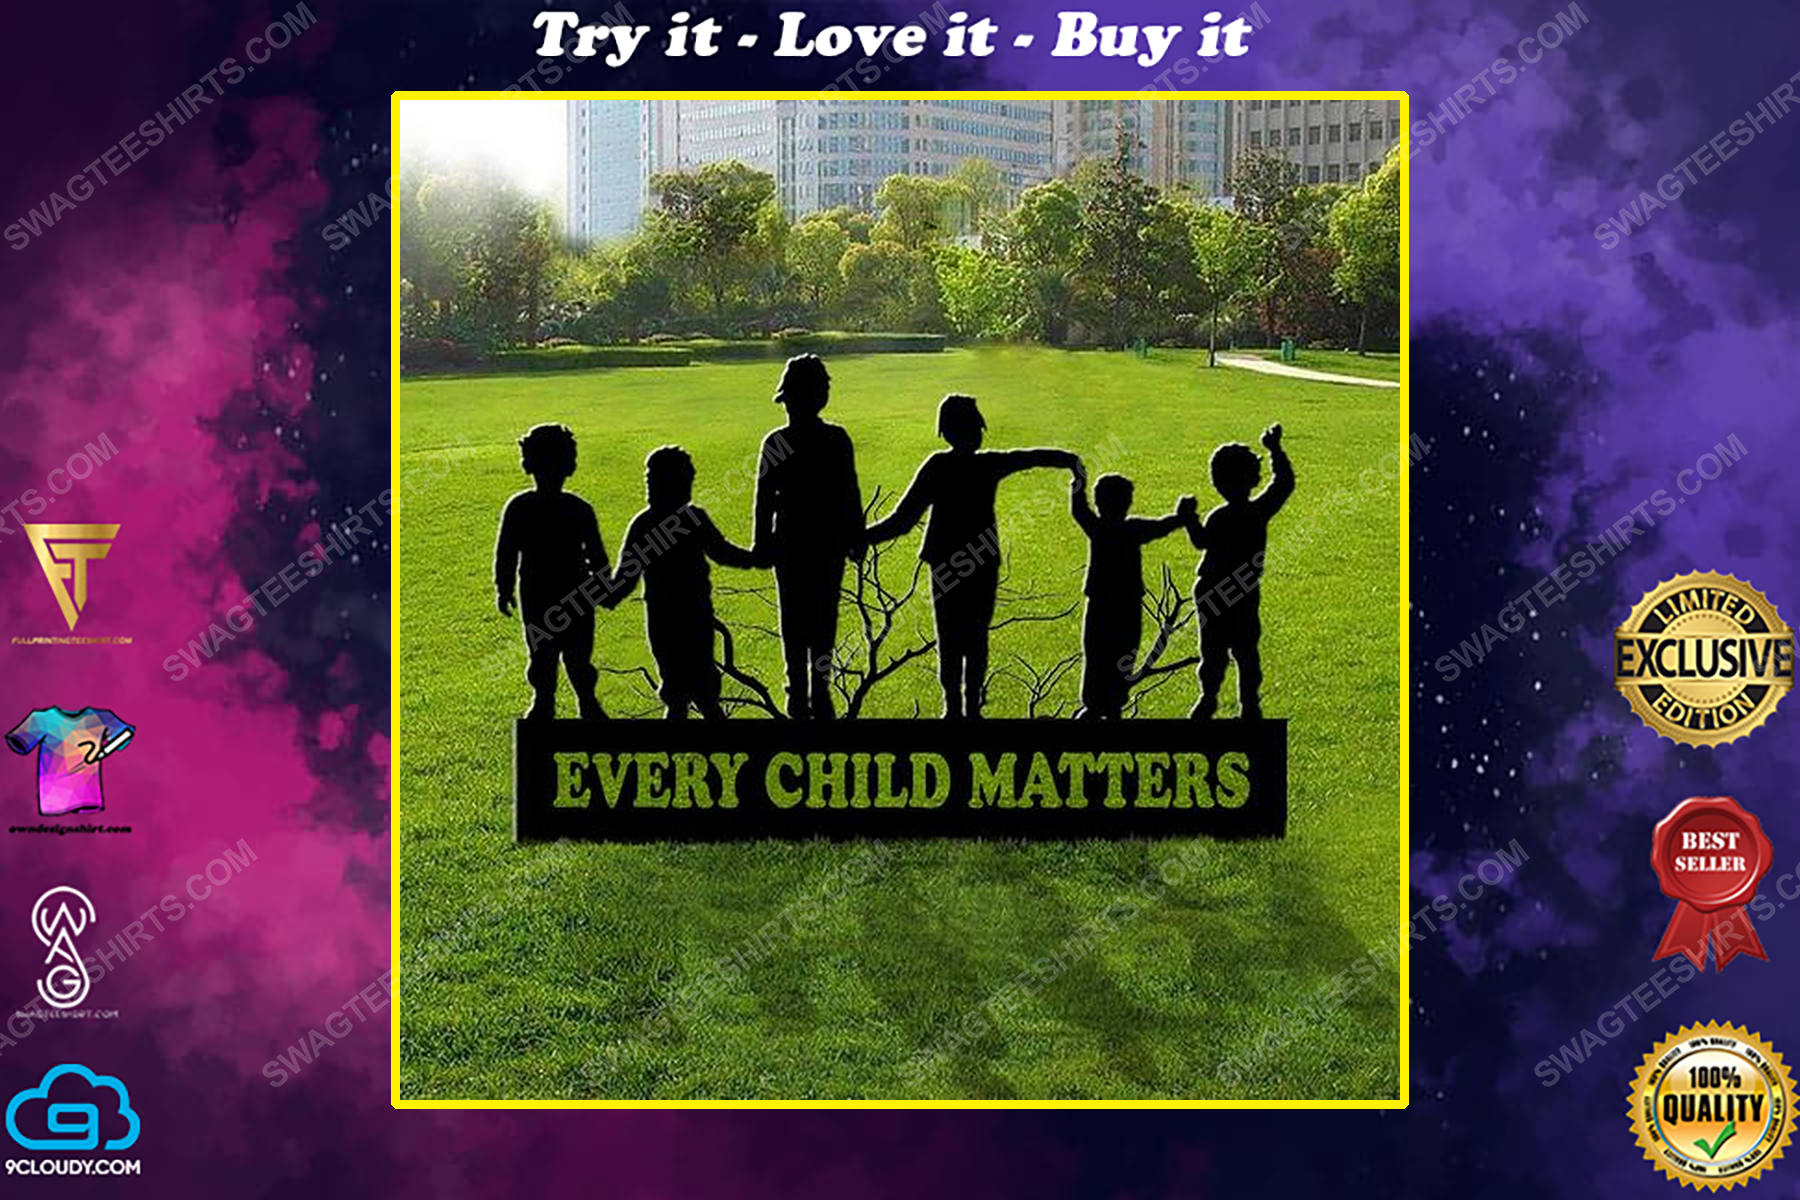 Awareness child lives matter movement merch every child matters yard sign